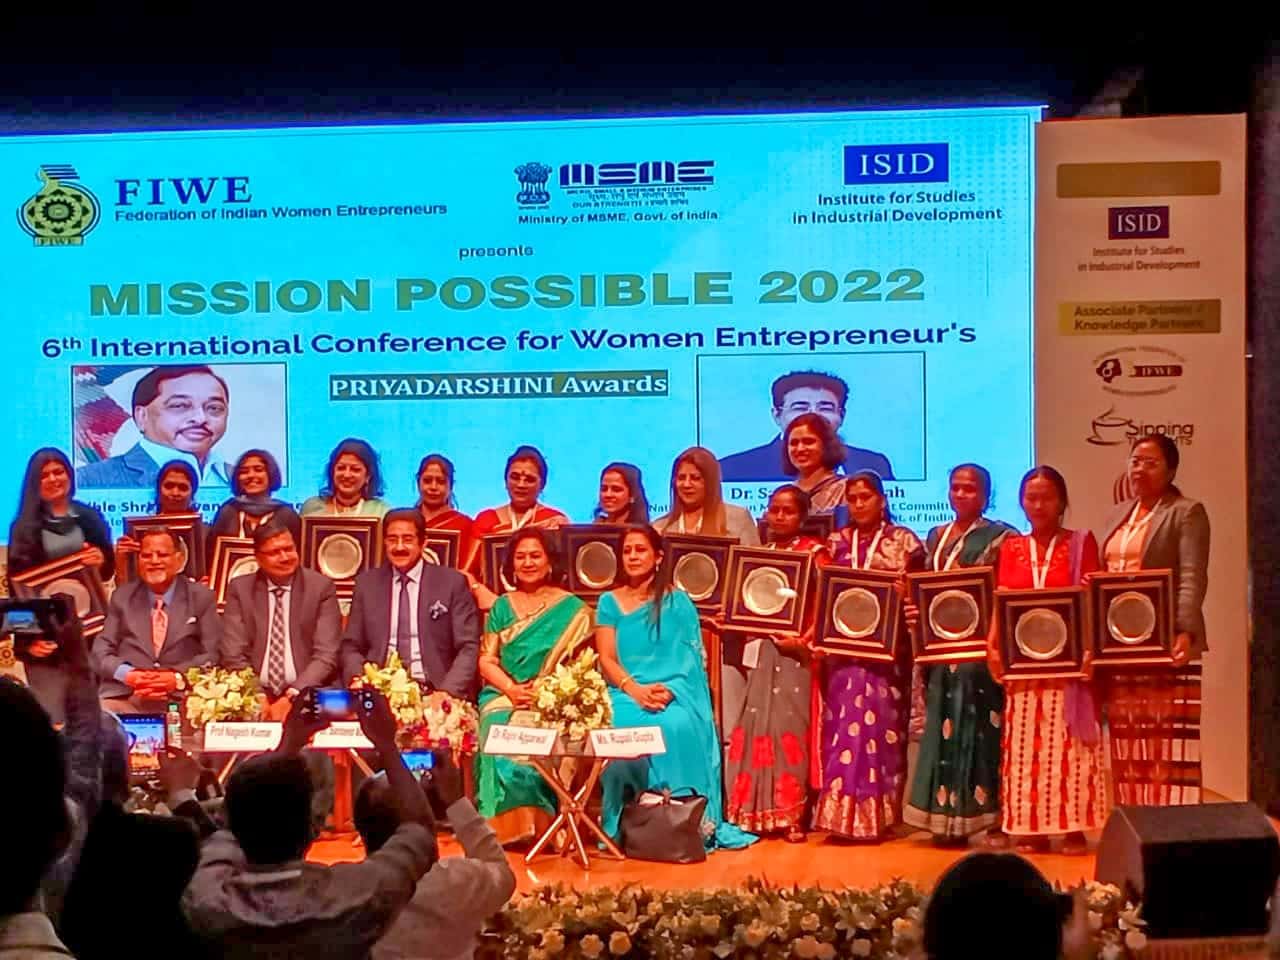 Women's entrepreneurship in India